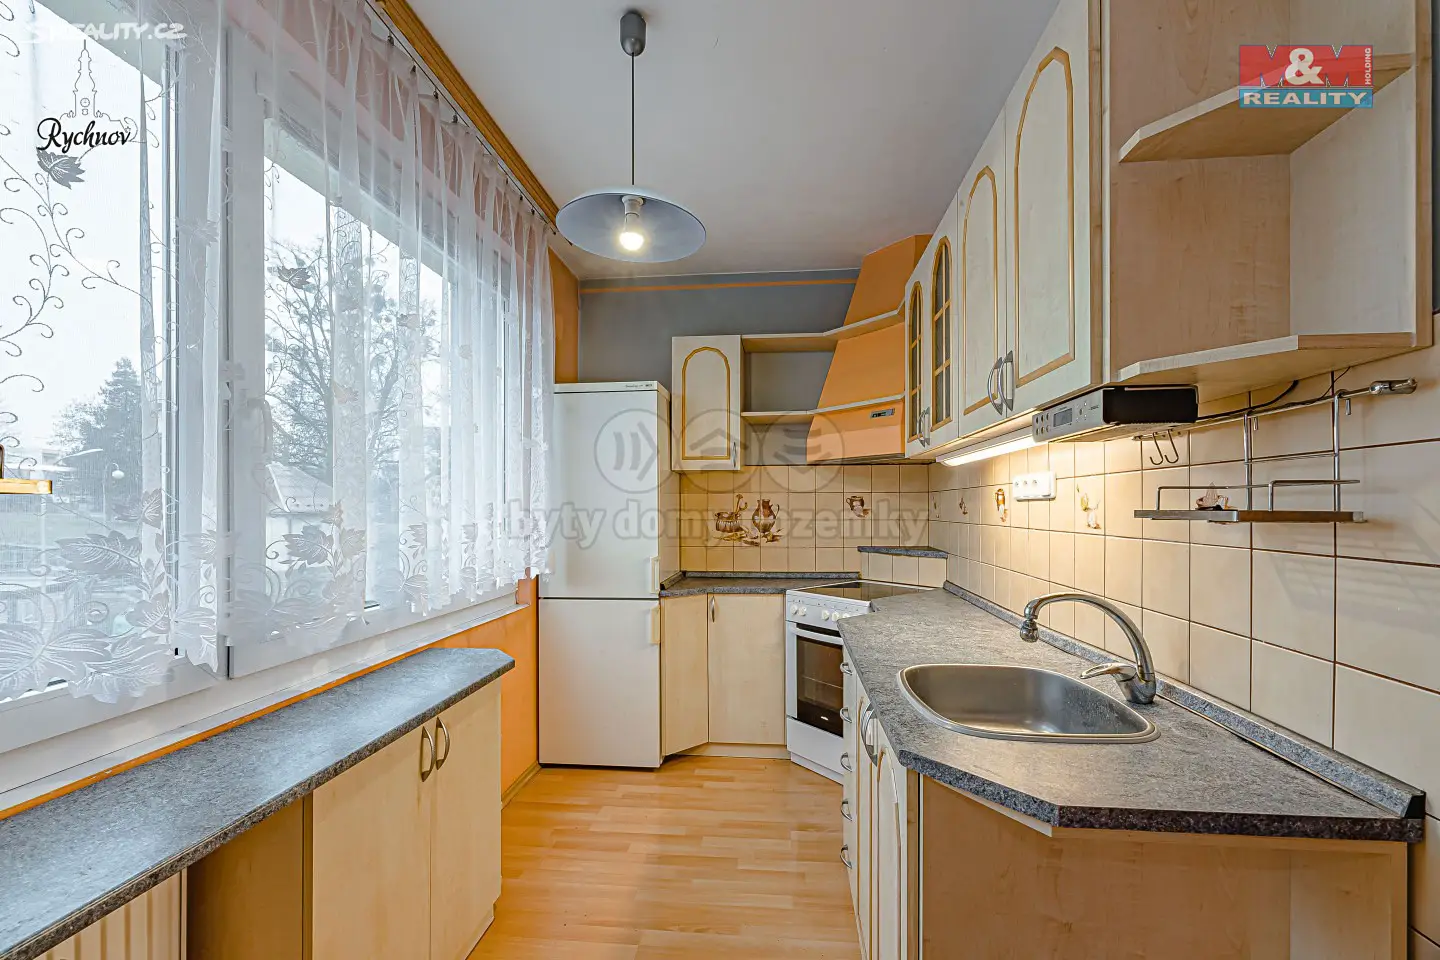 Prodej bytu 4+1 84 m², Na Trávníku, Rychnov nad Kněžnou